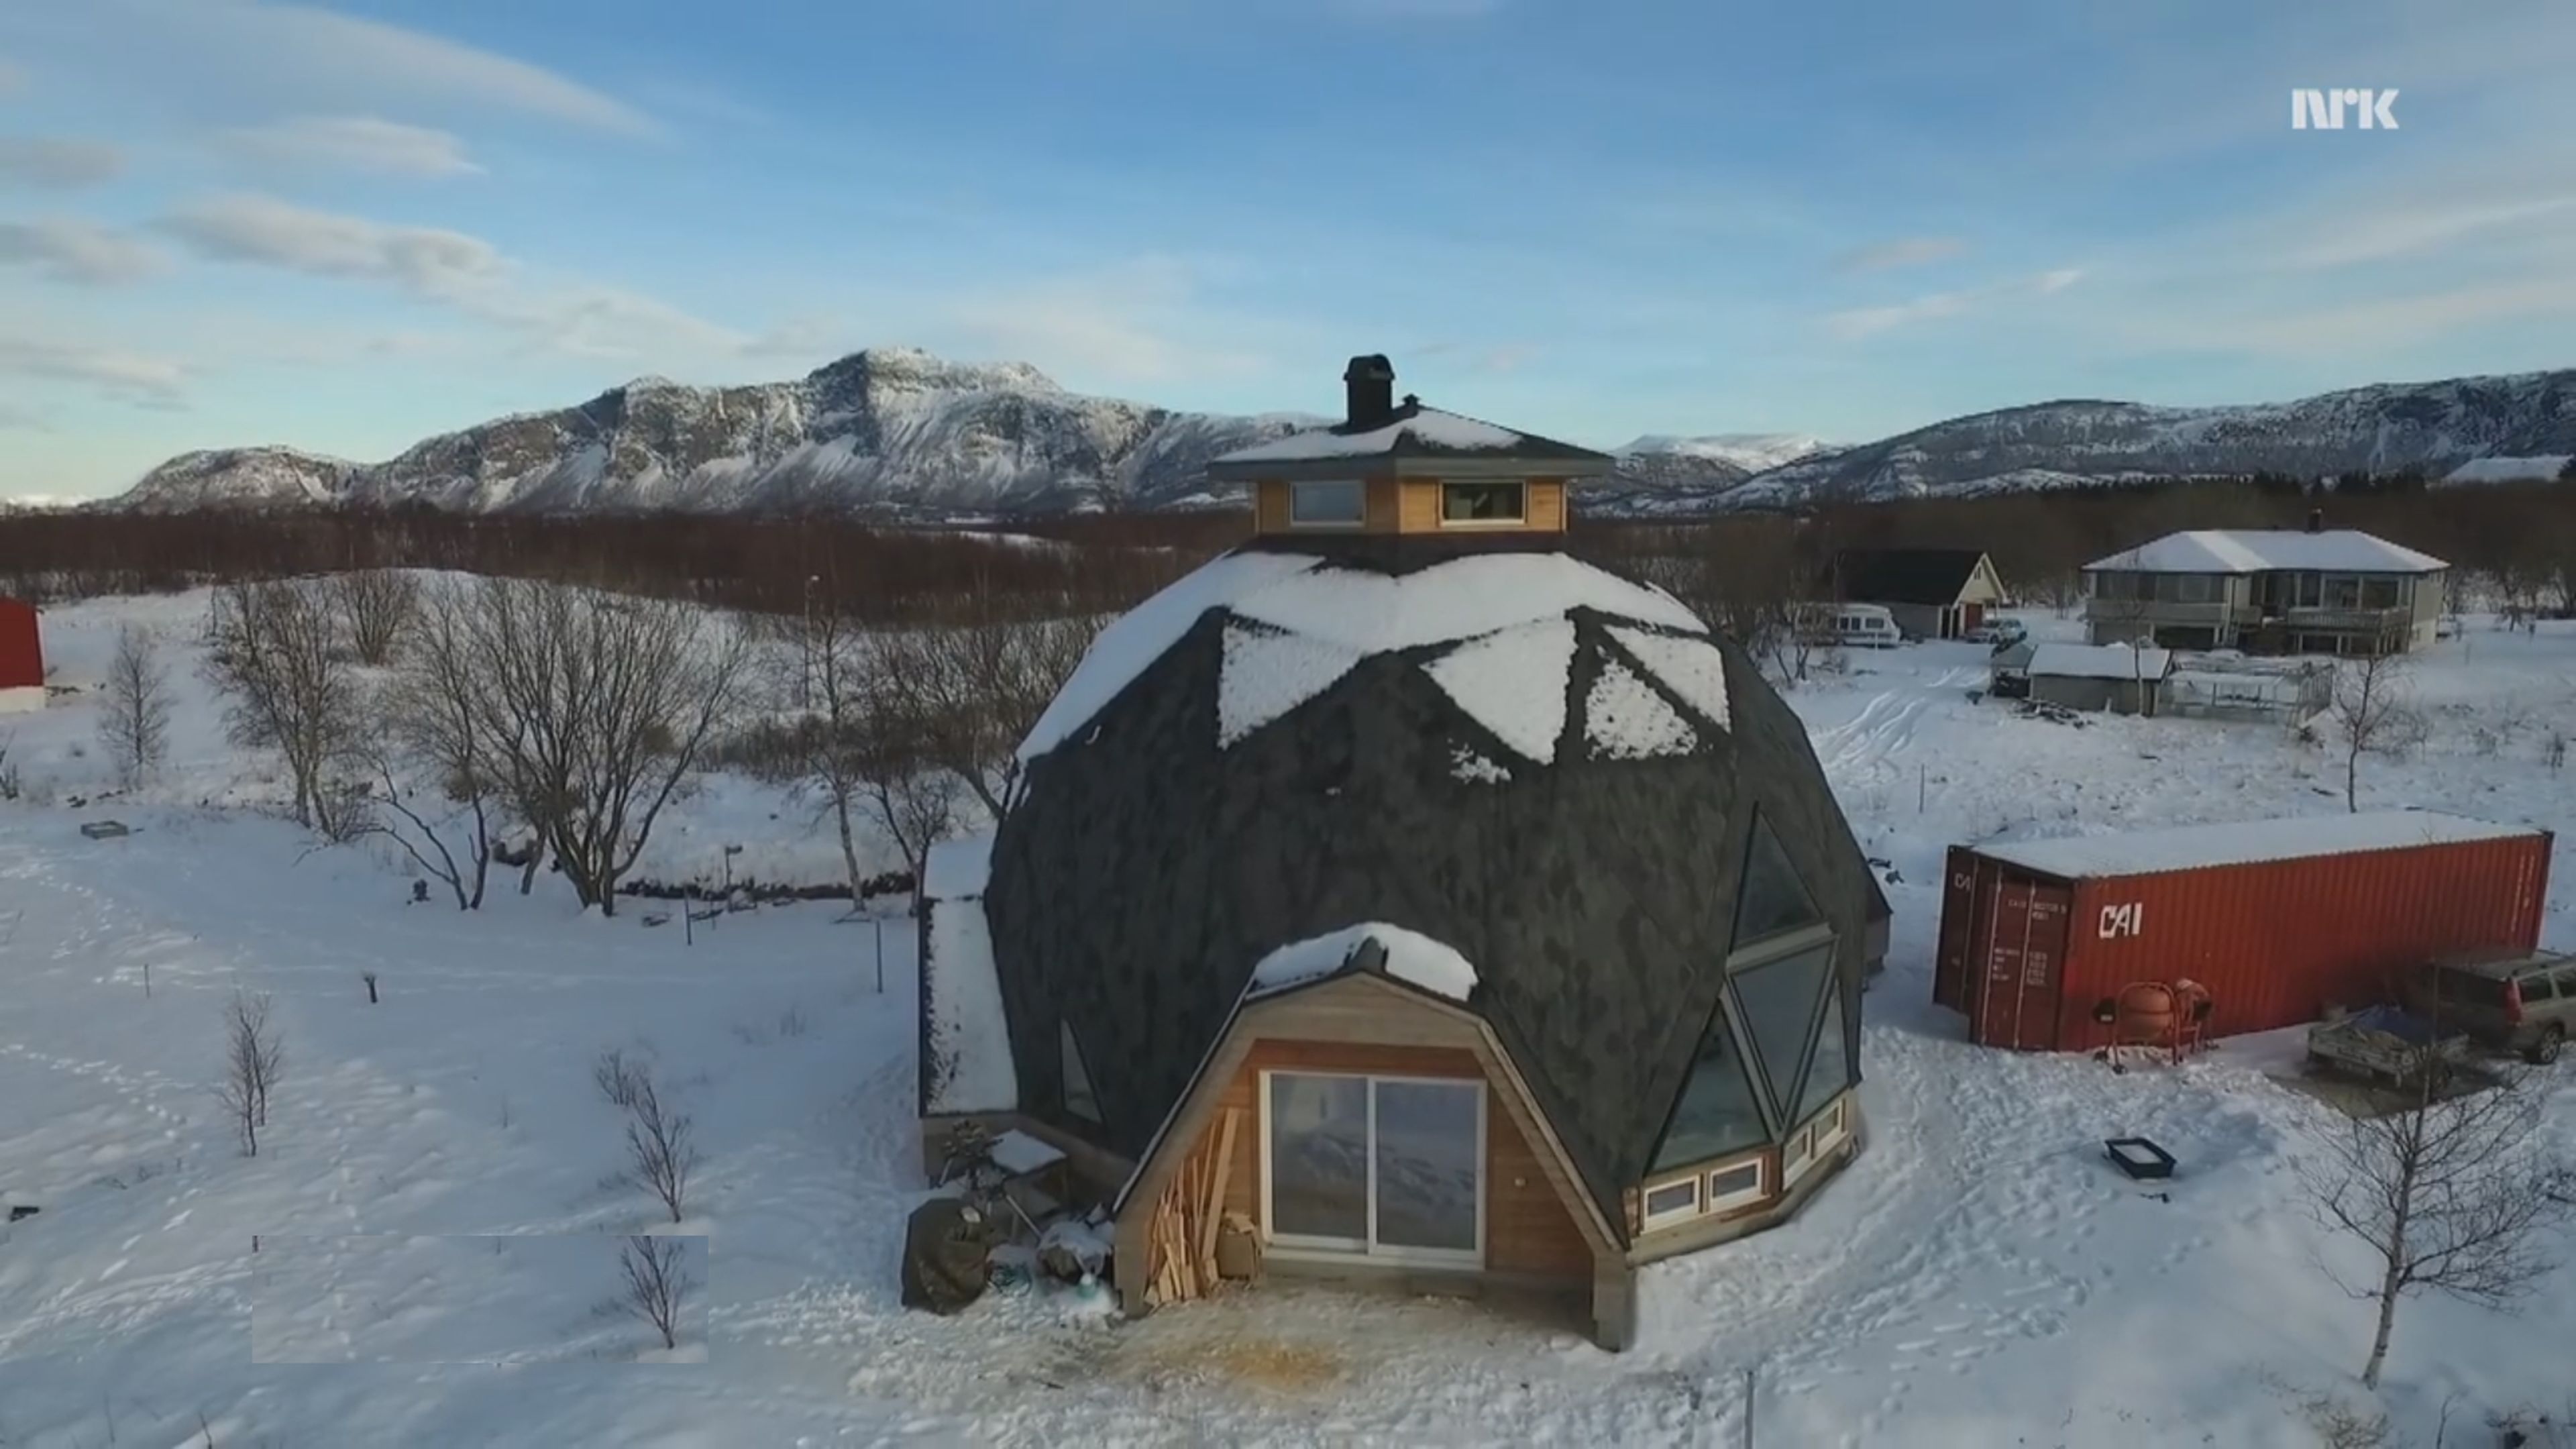 Casa con cúpula geodésica